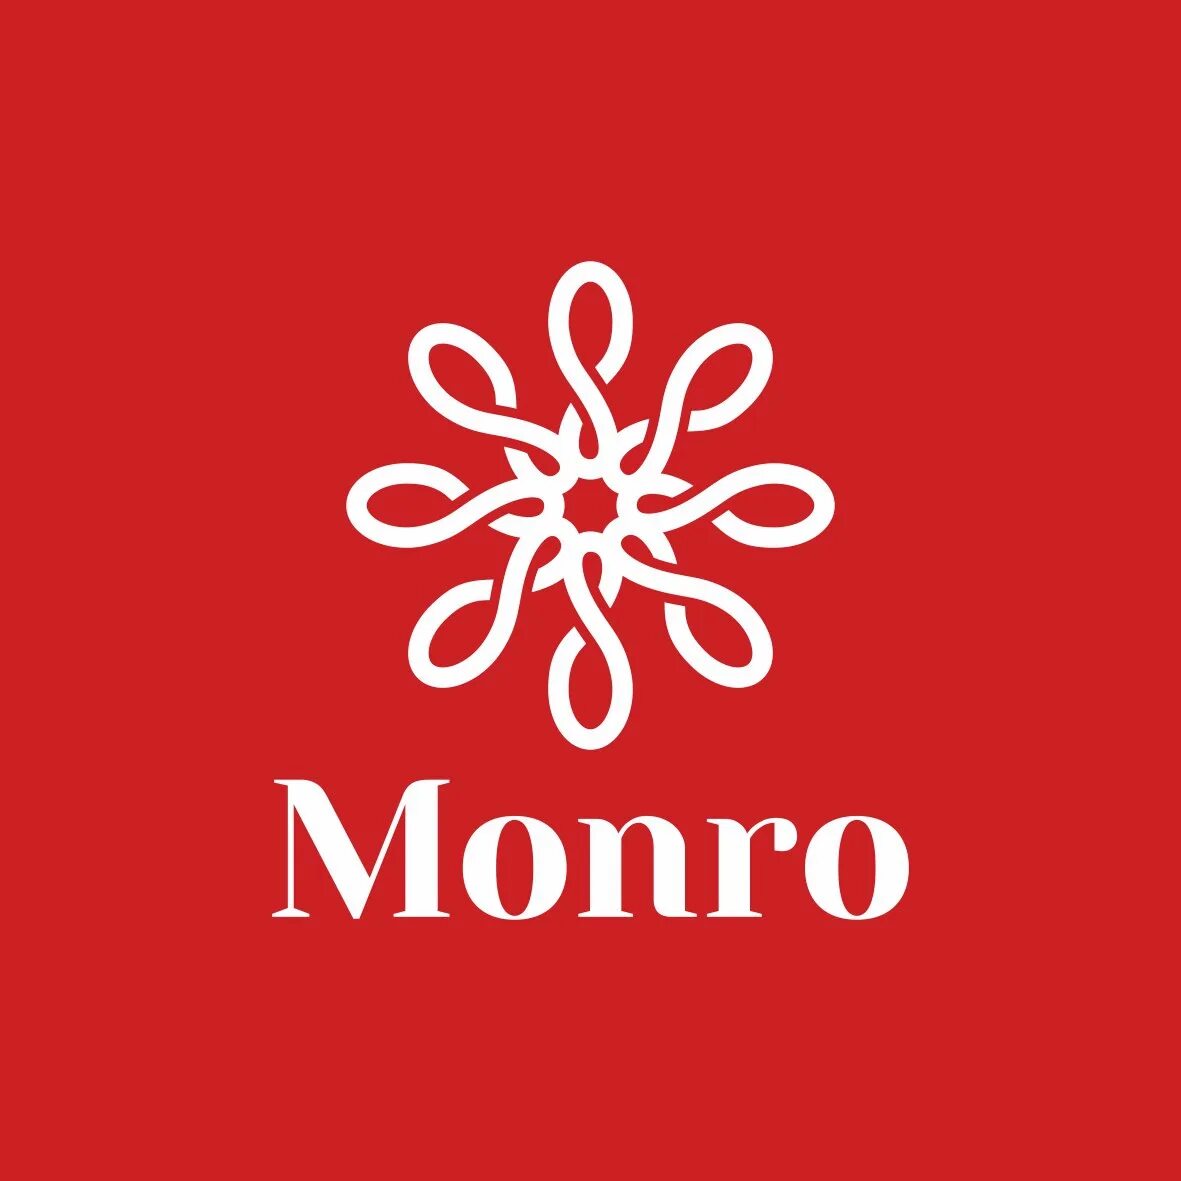 Monro com. Монро логотип. Монро магазин логотипы. Обувь логотип. Монро обувной магазин логотип.